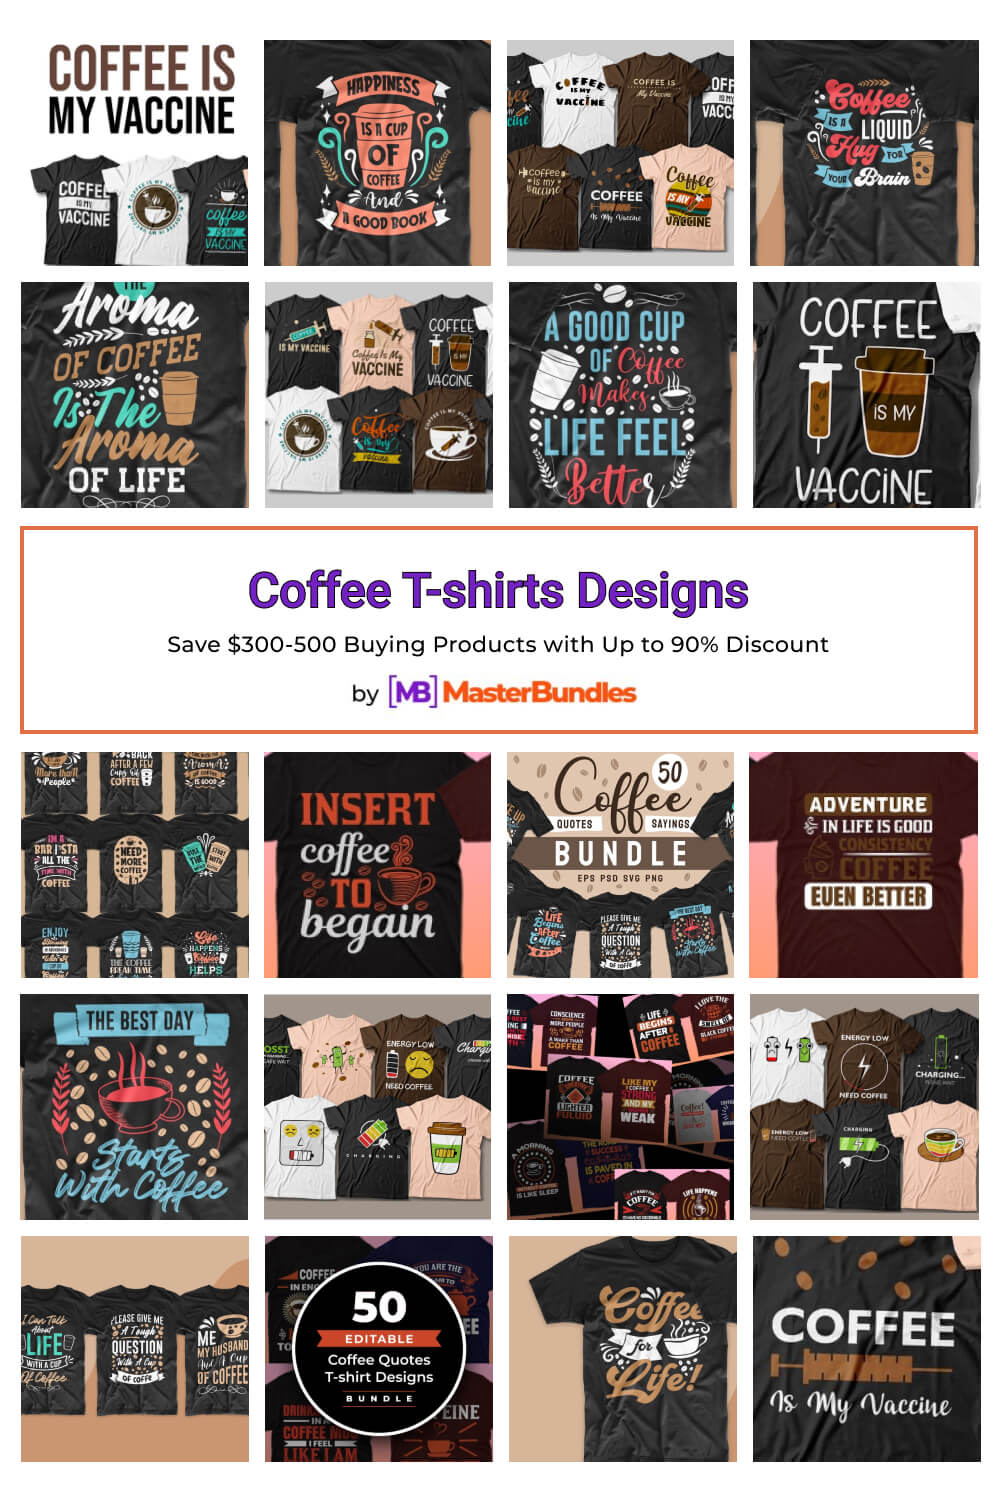 coffee t shirts designs pinterest image.